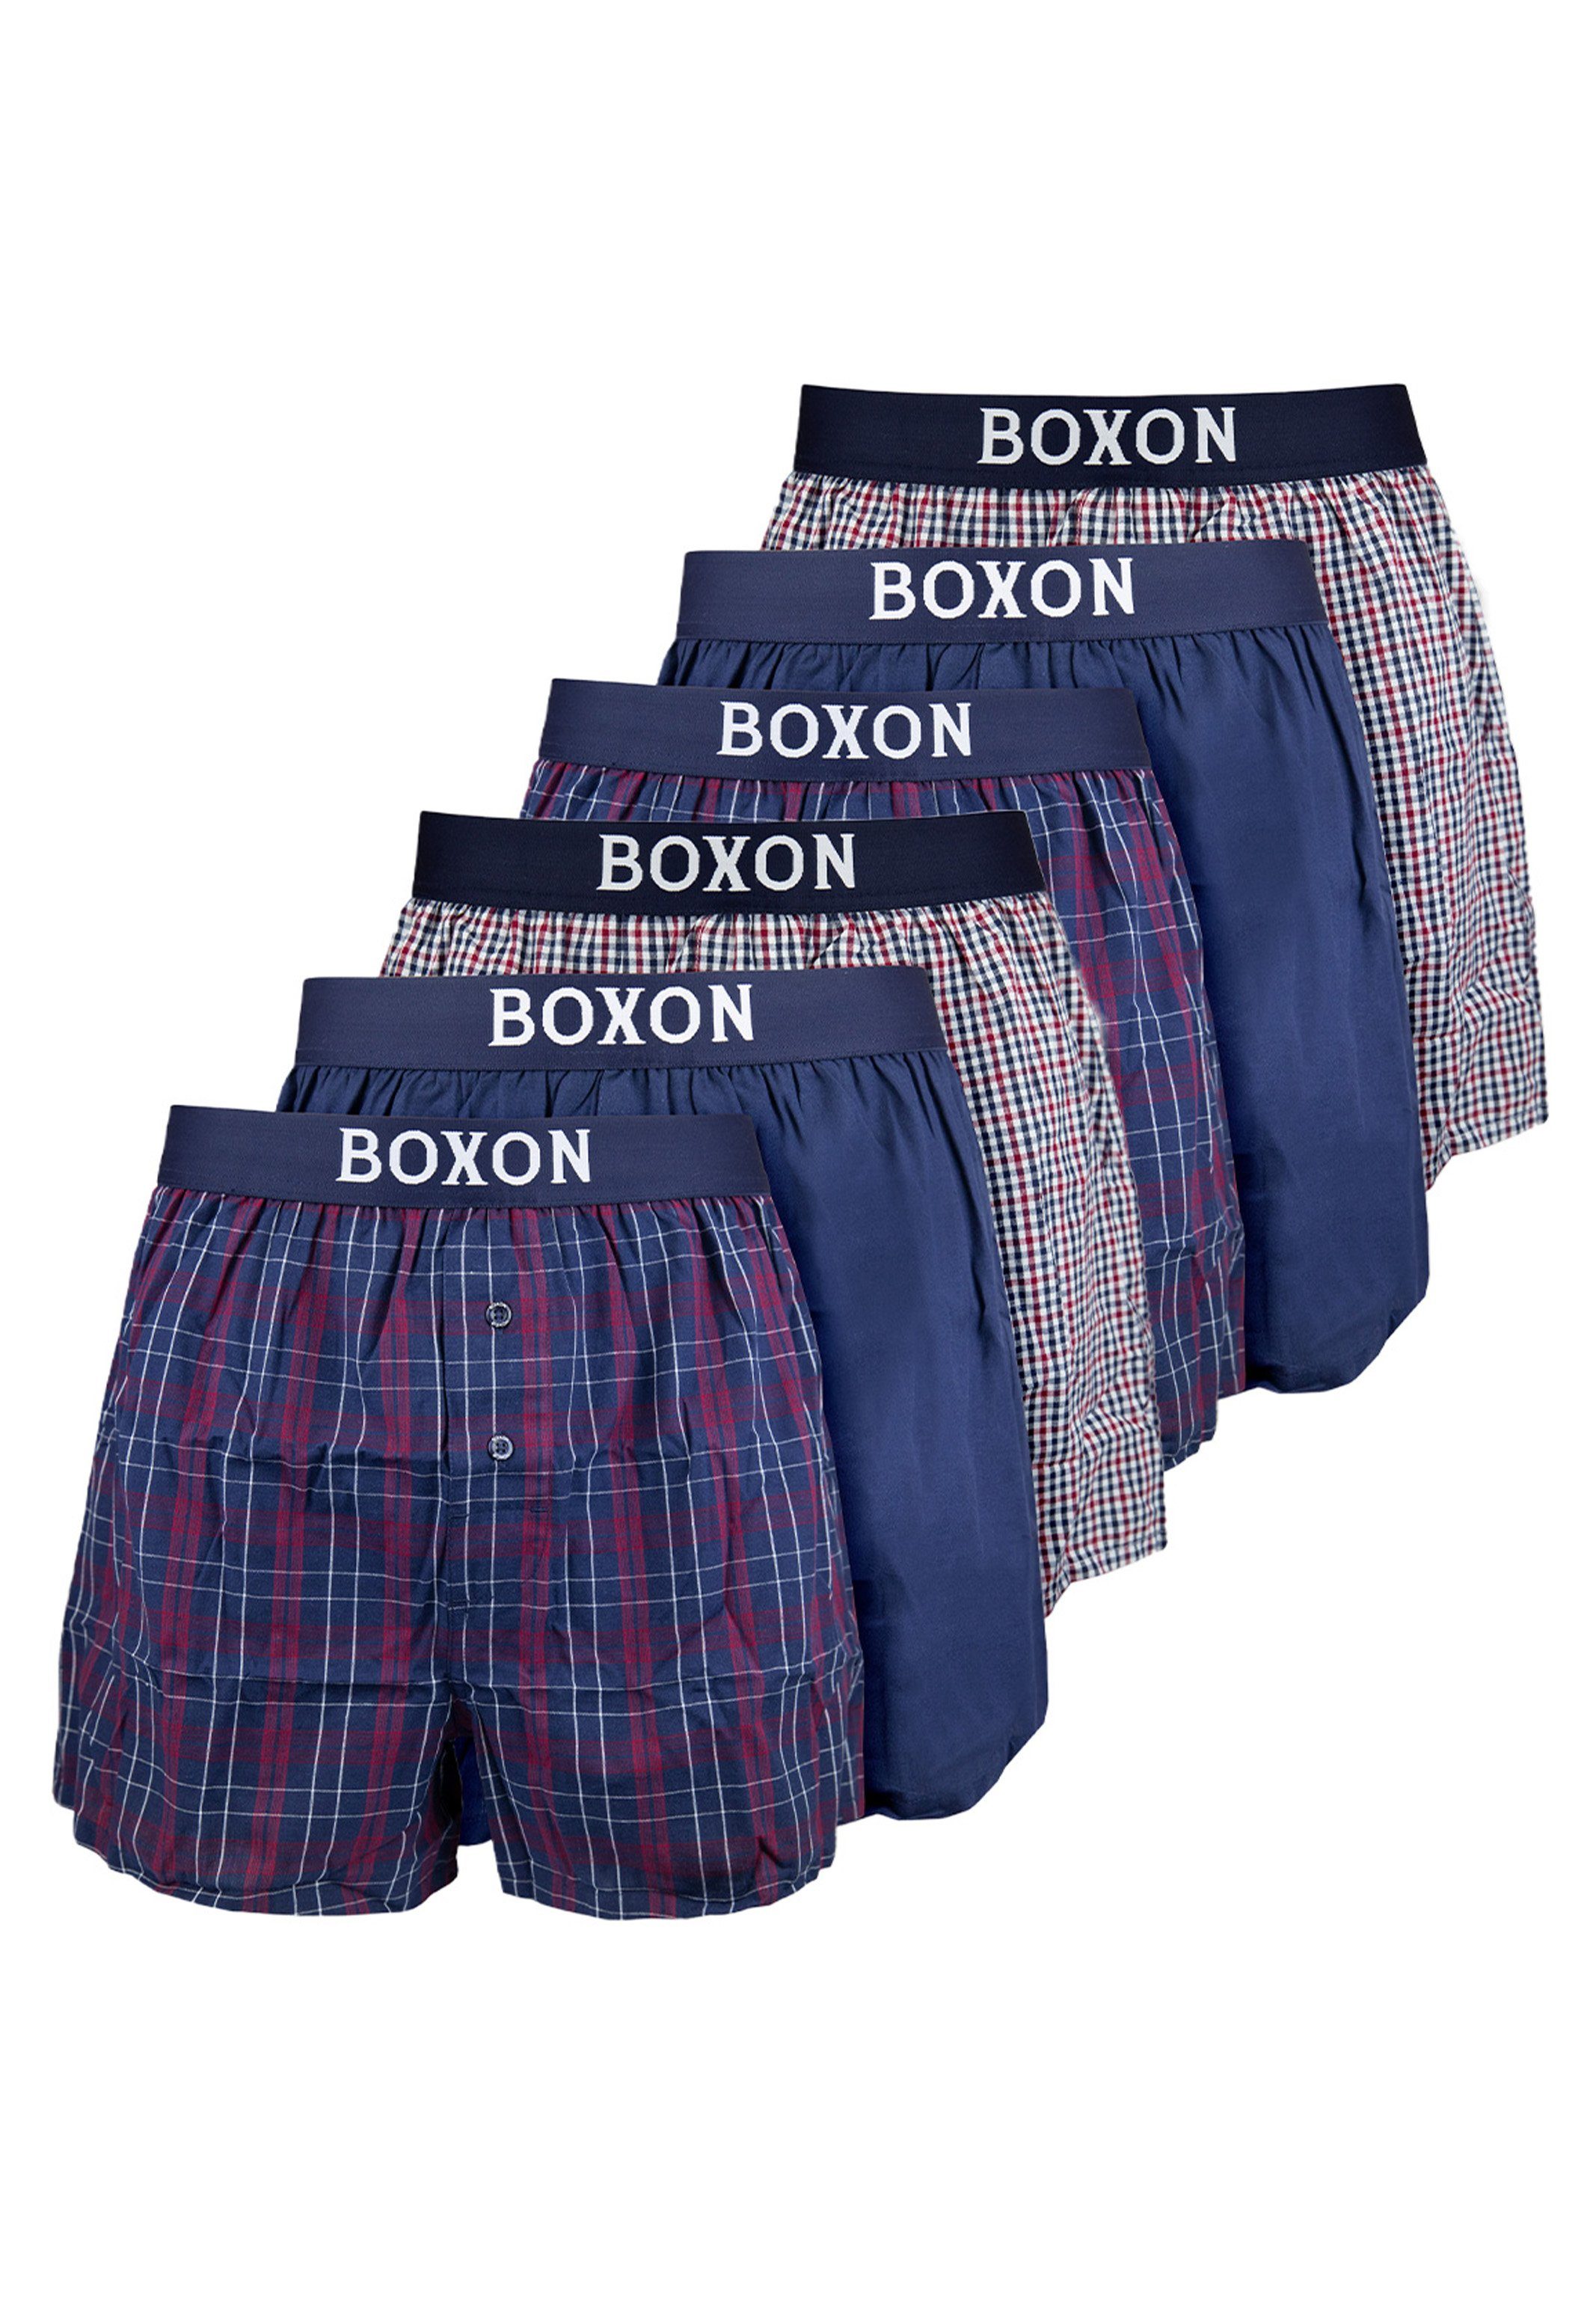 BOXON Boxershorts 6er Pack Web (Spar-Set, 6-St) Boxershorts - Baumwolle - Mit Eingriff - Softer Gummibund Bordeux